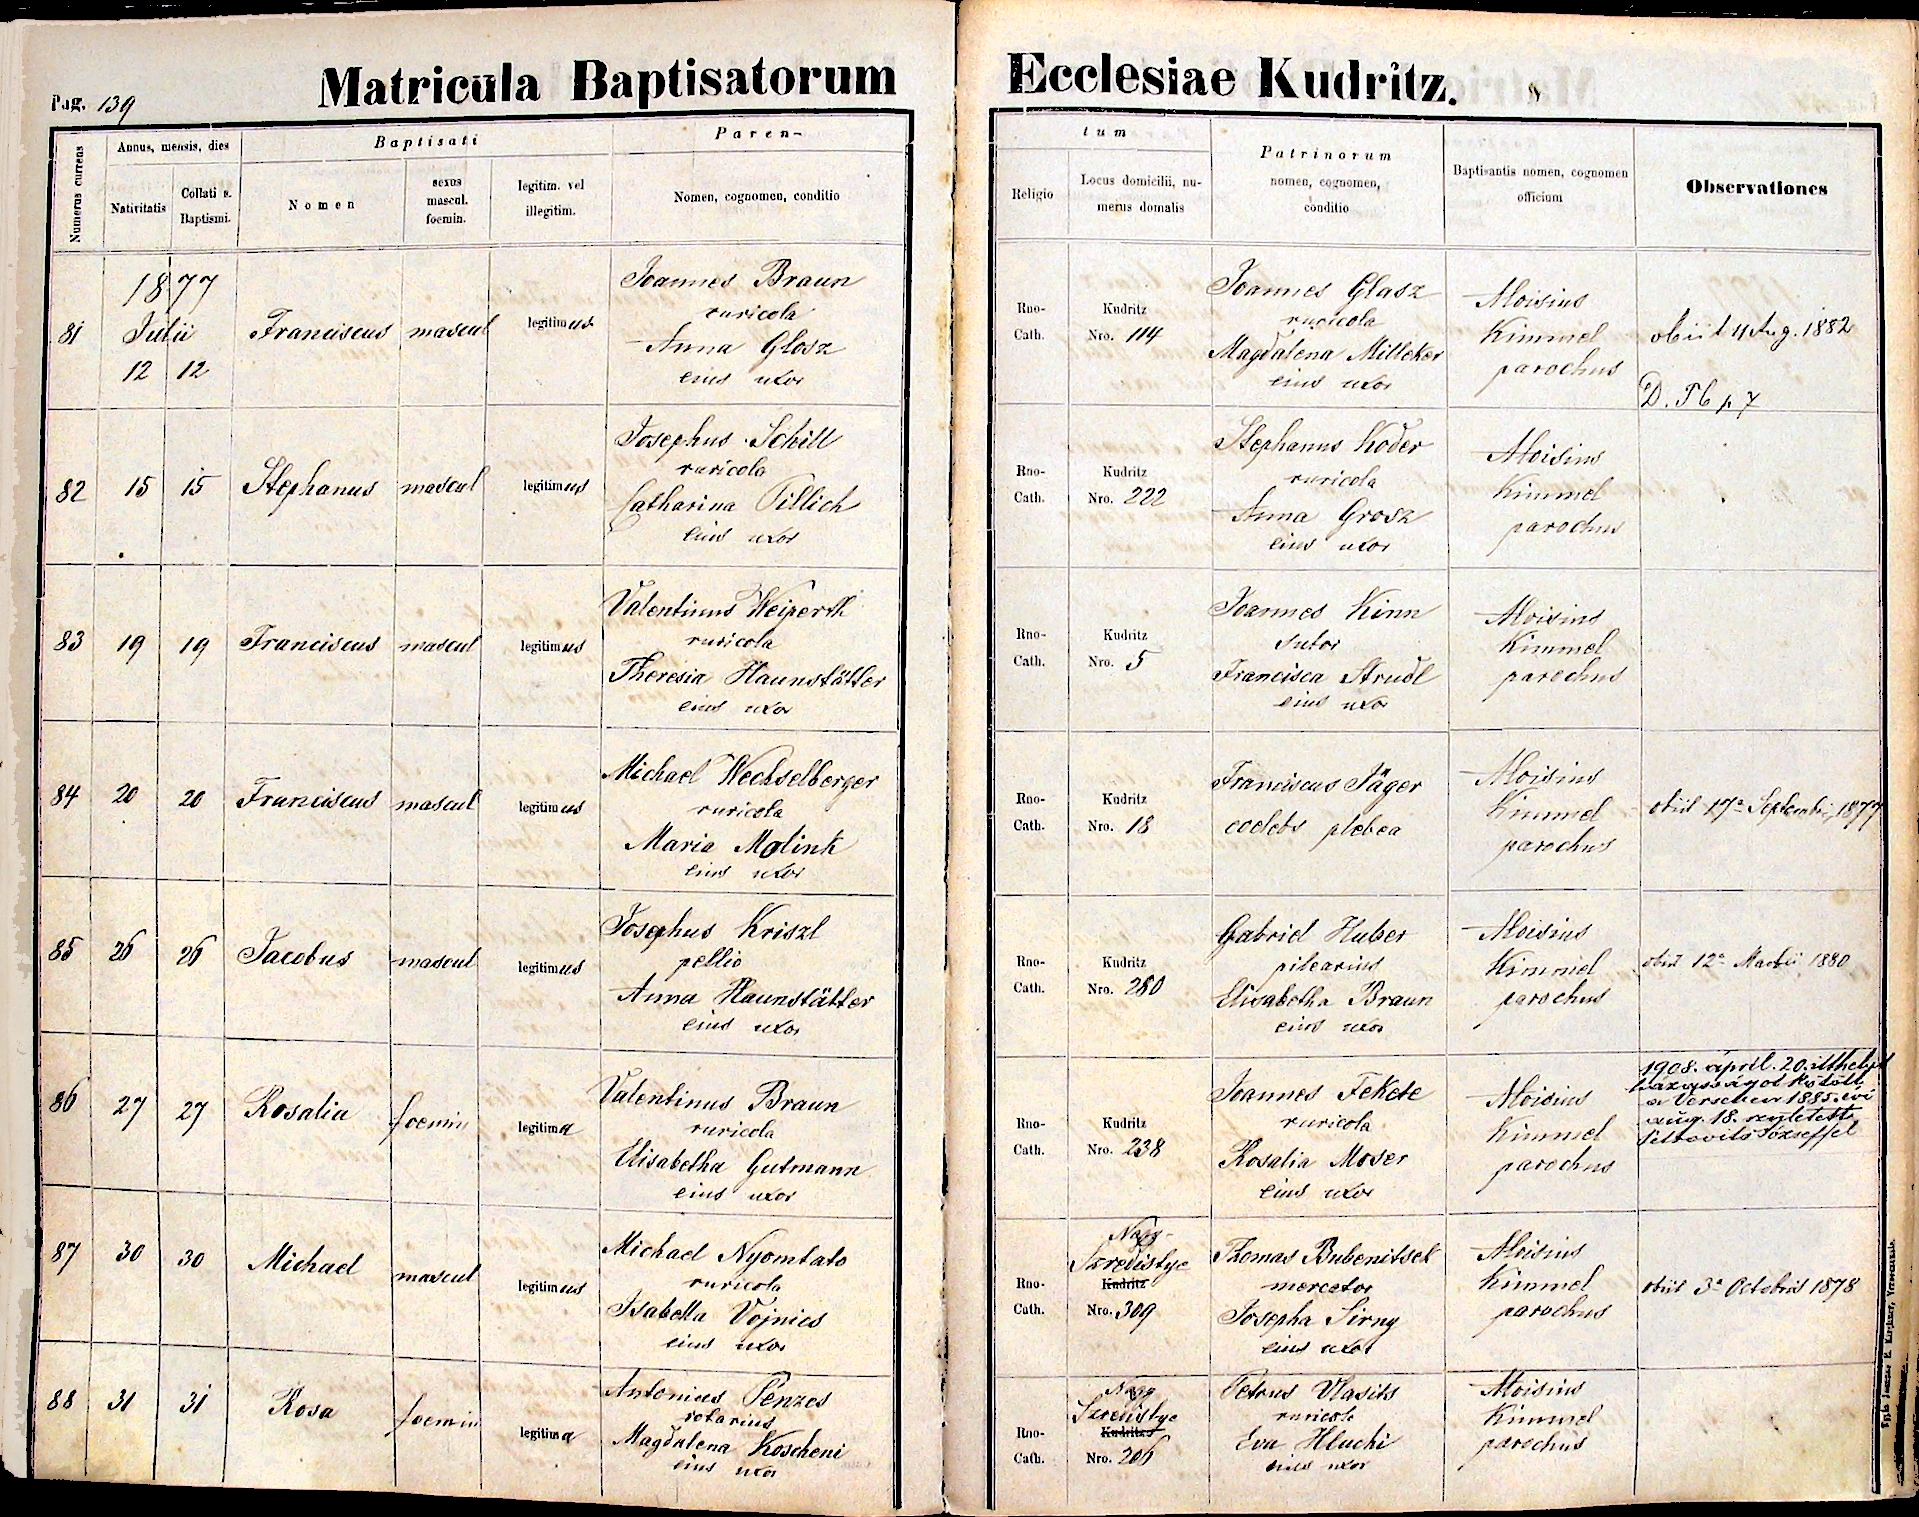 images/church_records/BIRTHS/1870-1879B/1877/139